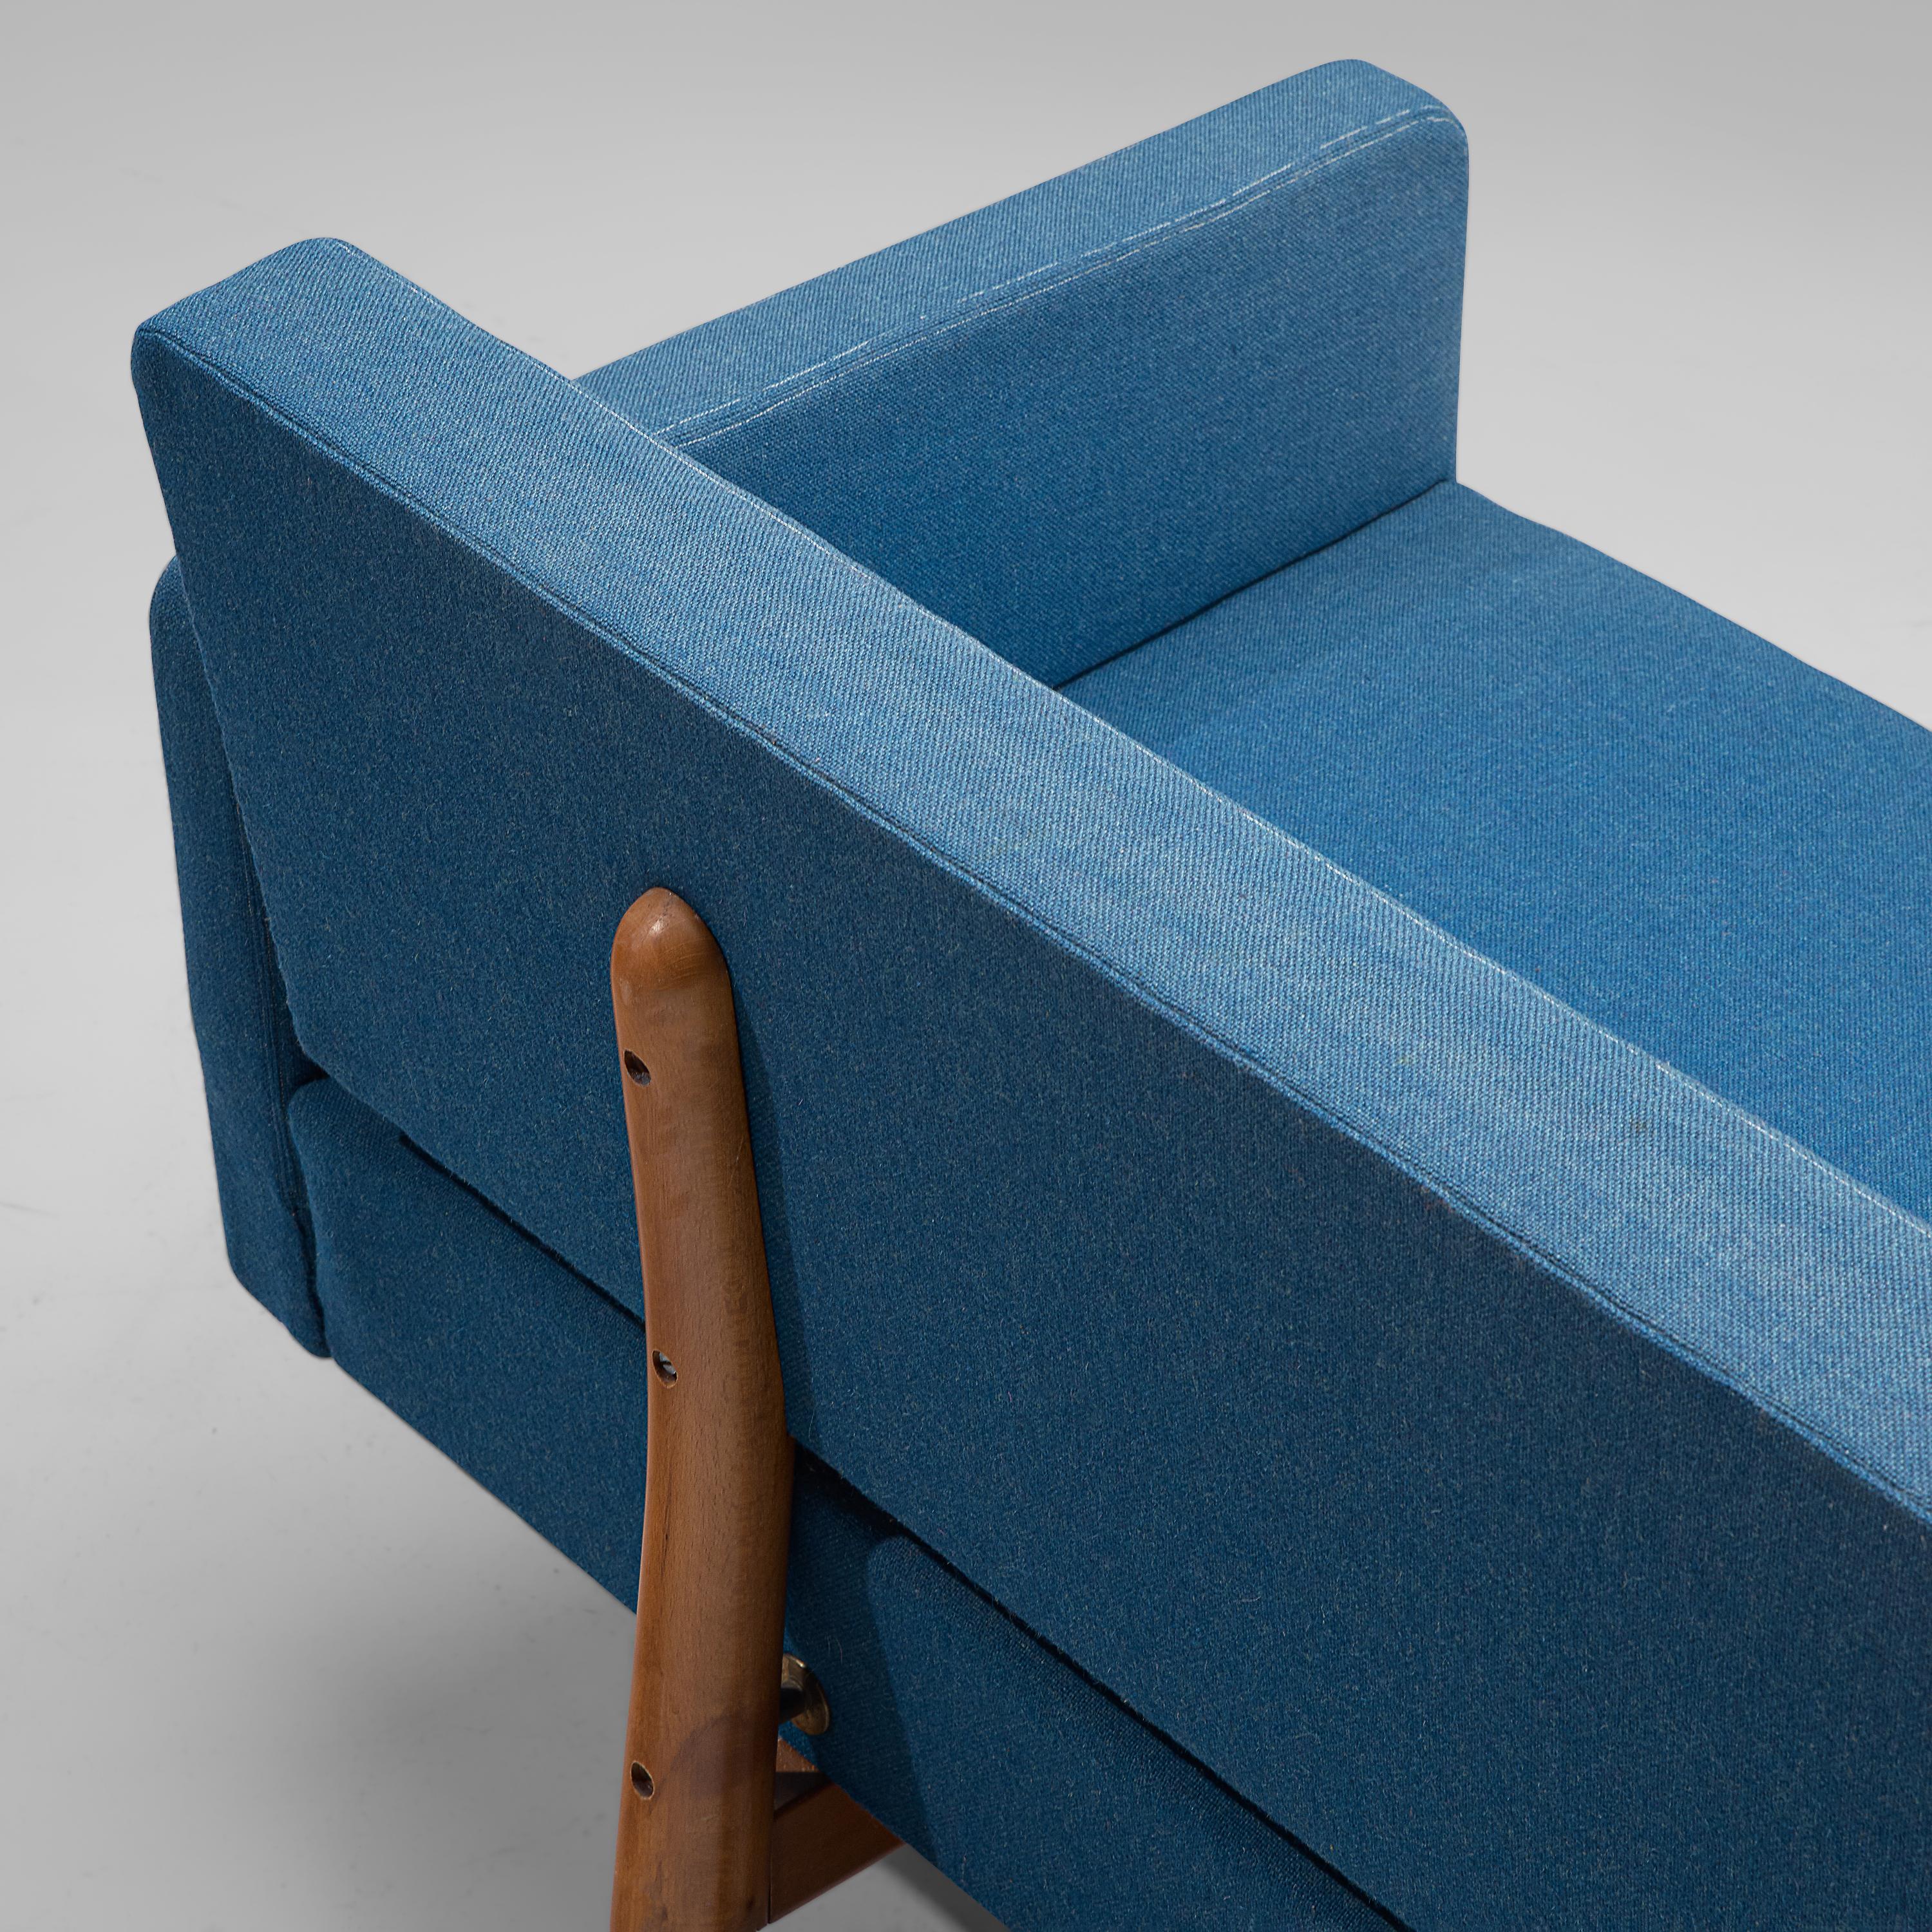 Mid-Century Modern Edward Wormley for Dunbar Sofa 5316 in Blue Fabric Upholstery